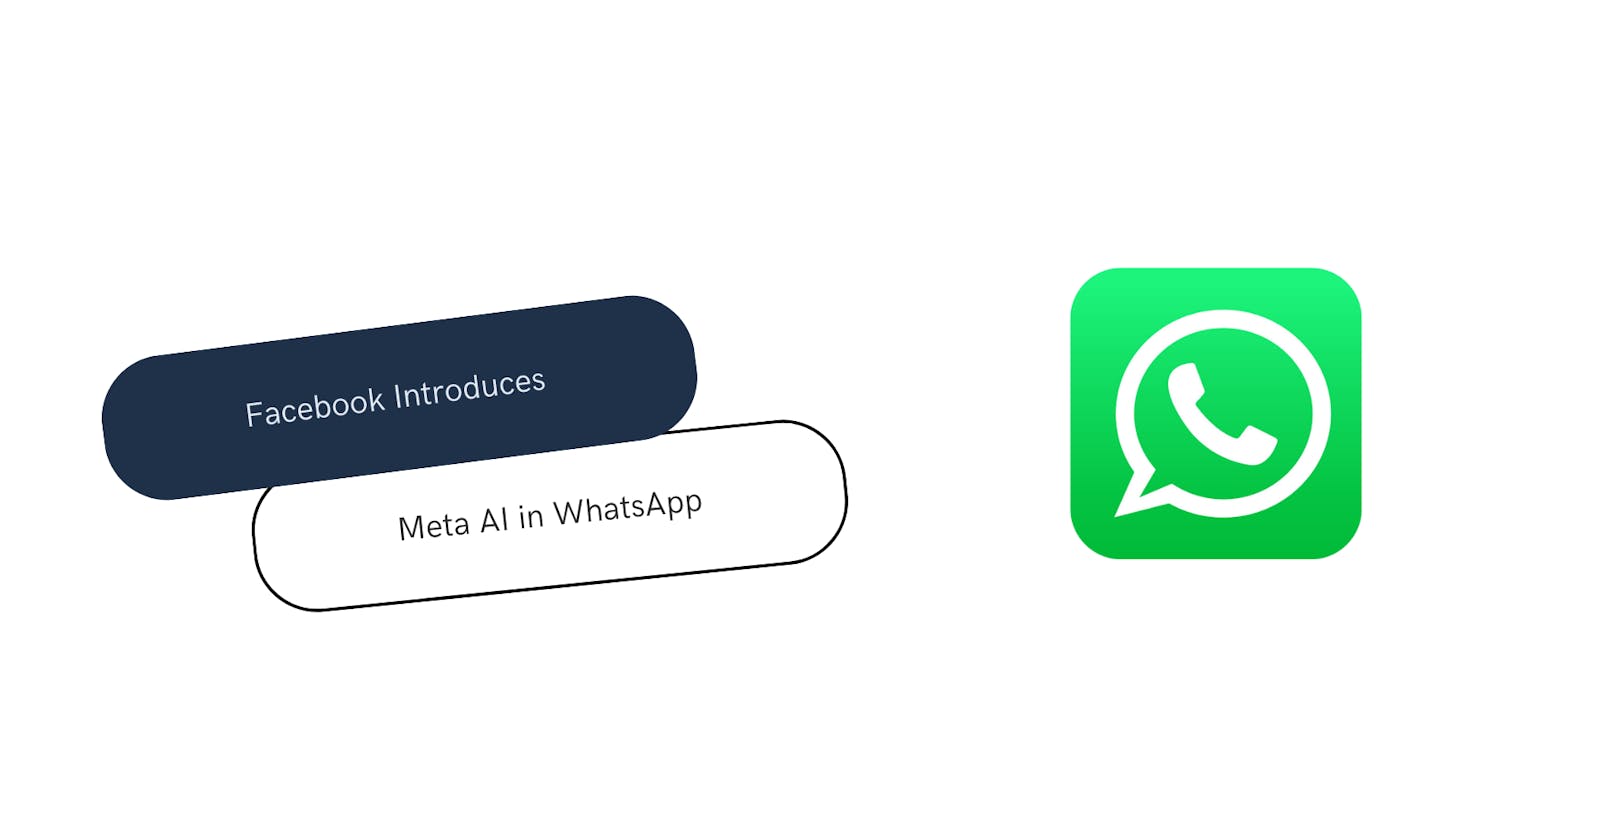 Facebook Introduces Meta AI in WhatsApp